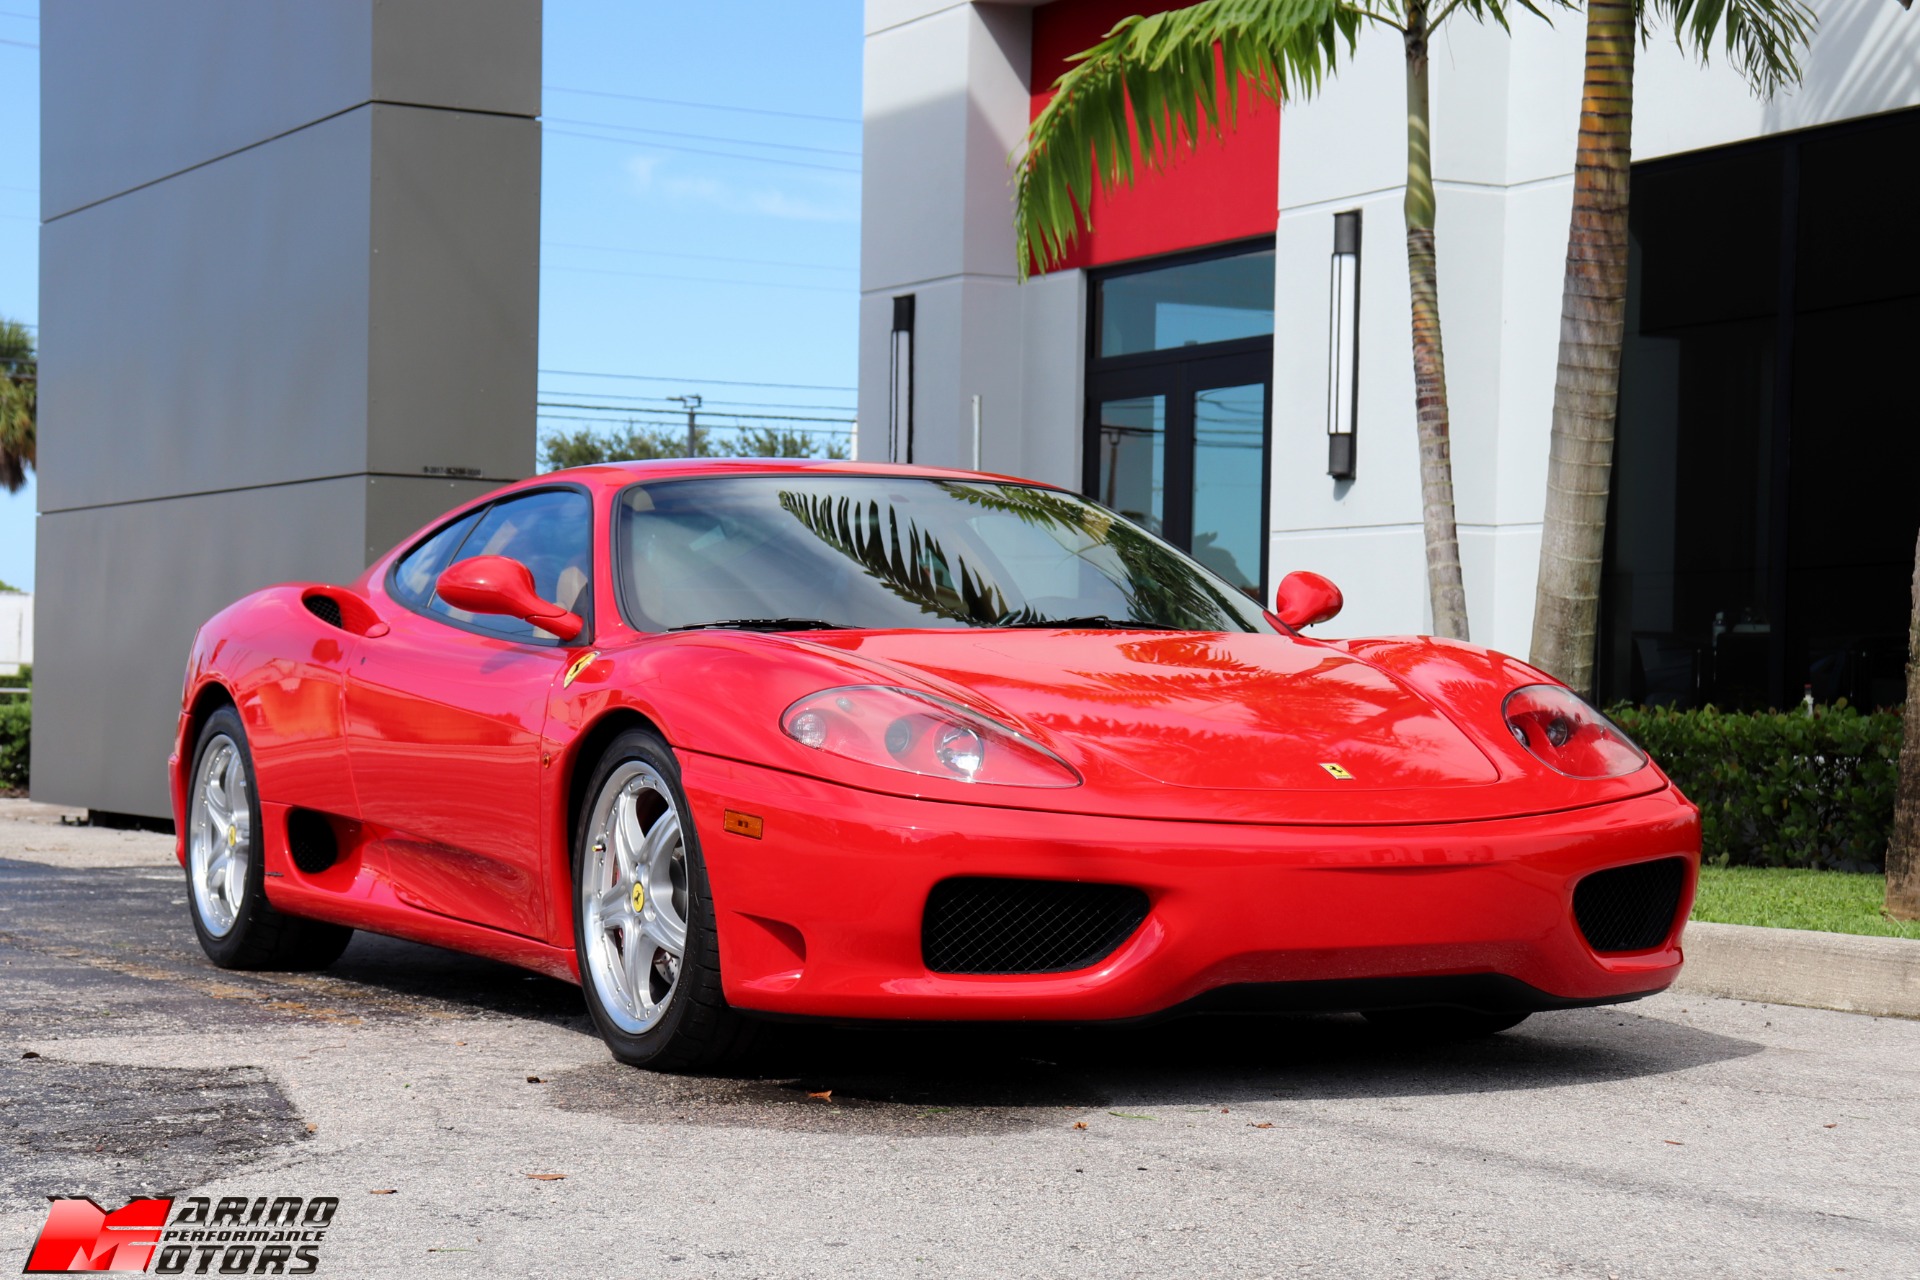 Used 2002 Ferrari 360 Modena For Sale ($104,900) | Marino Performance ...